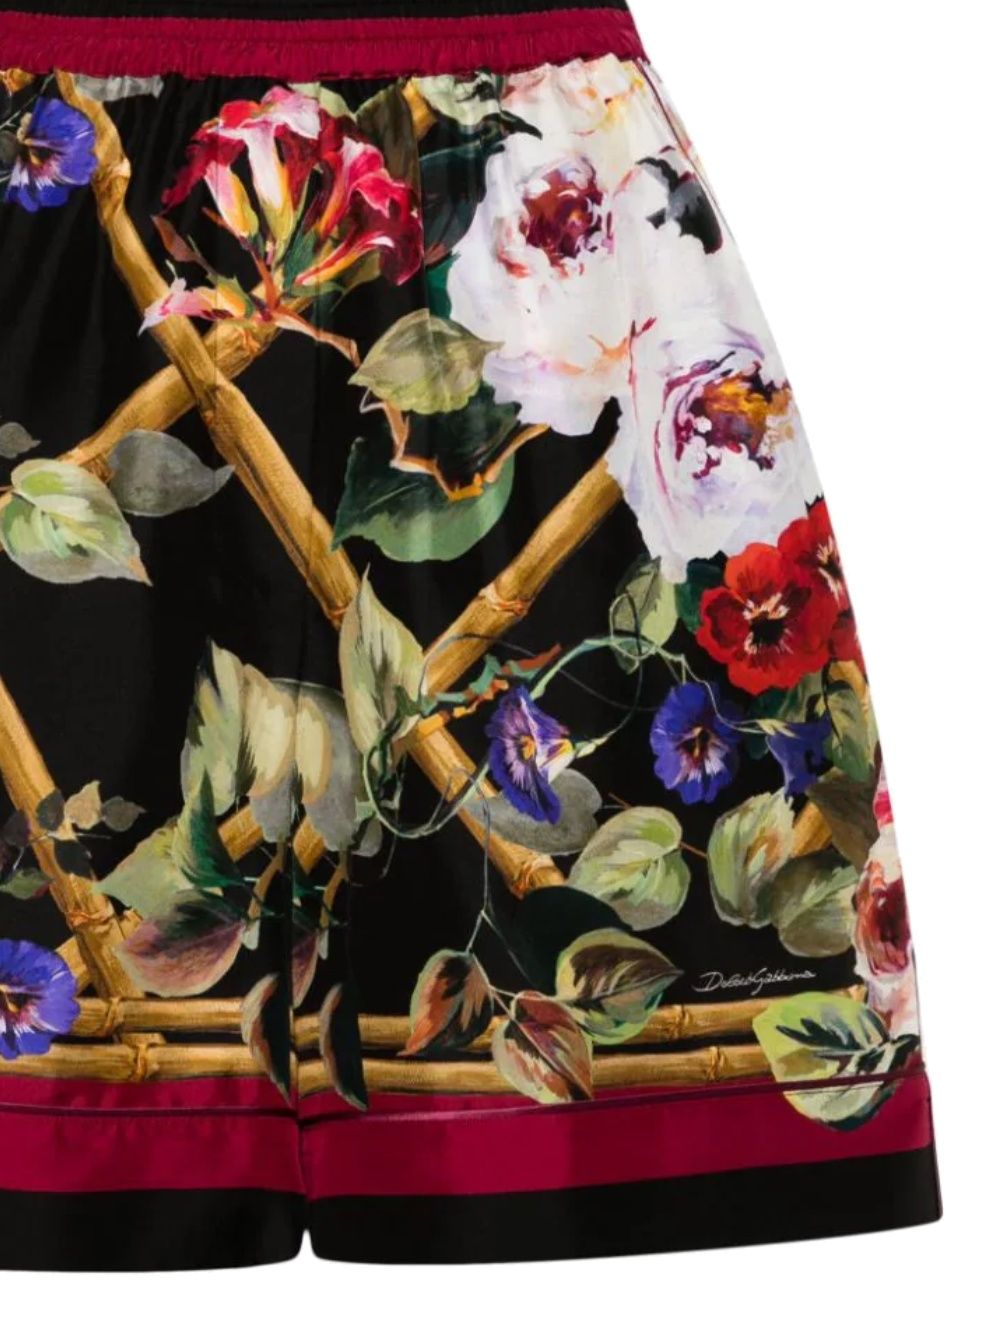 Dolce &amp; Gabbana ROSETO shorts WITH GRECA